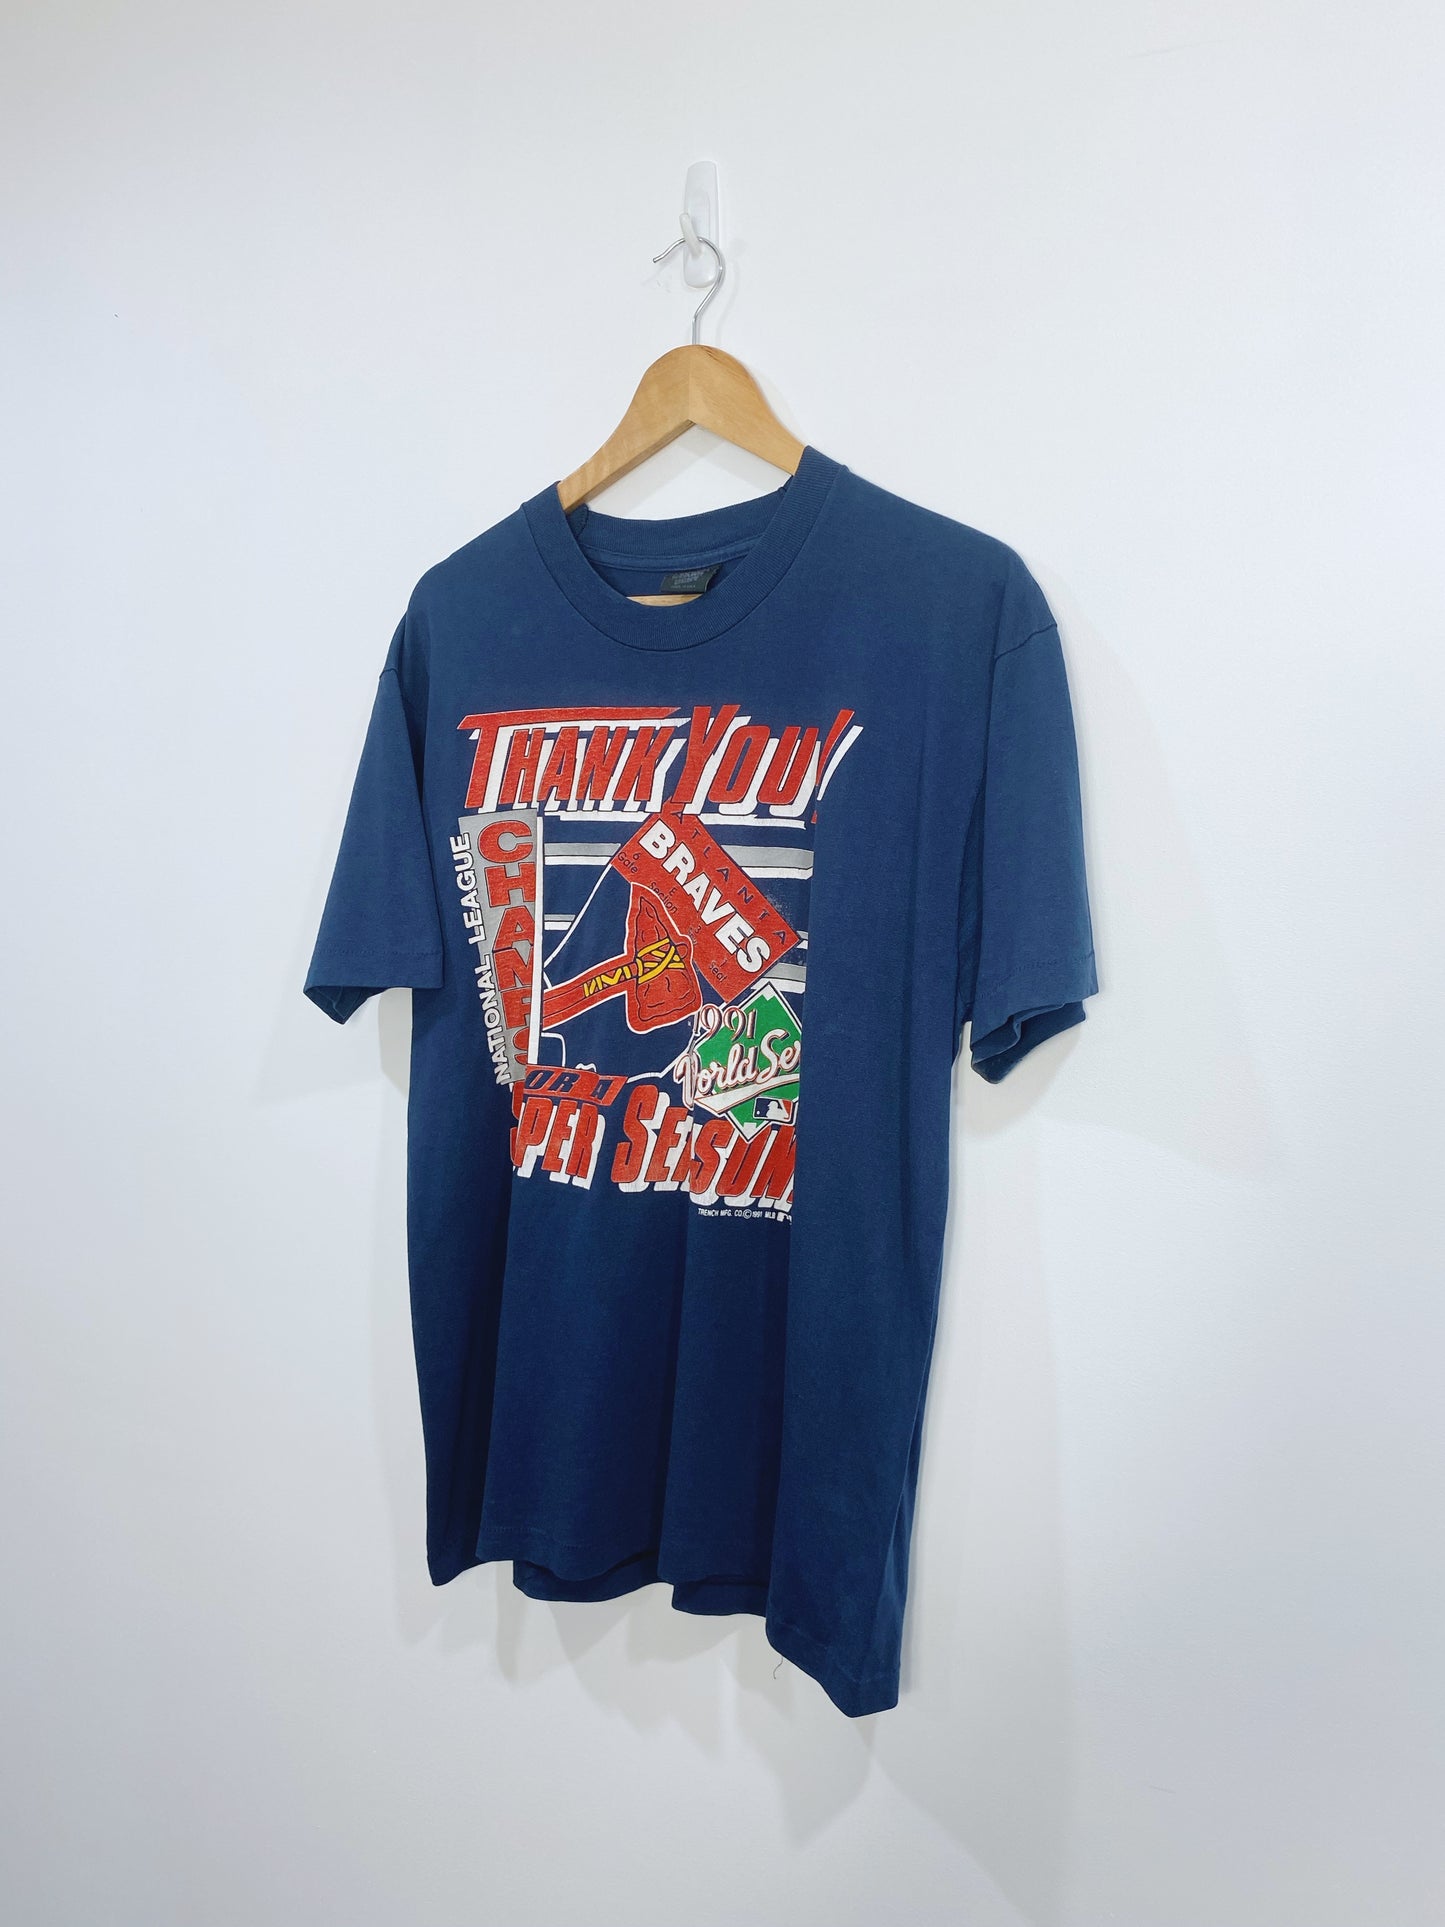 Vintage 1991 Atlanta Braves Championship T-shirt L